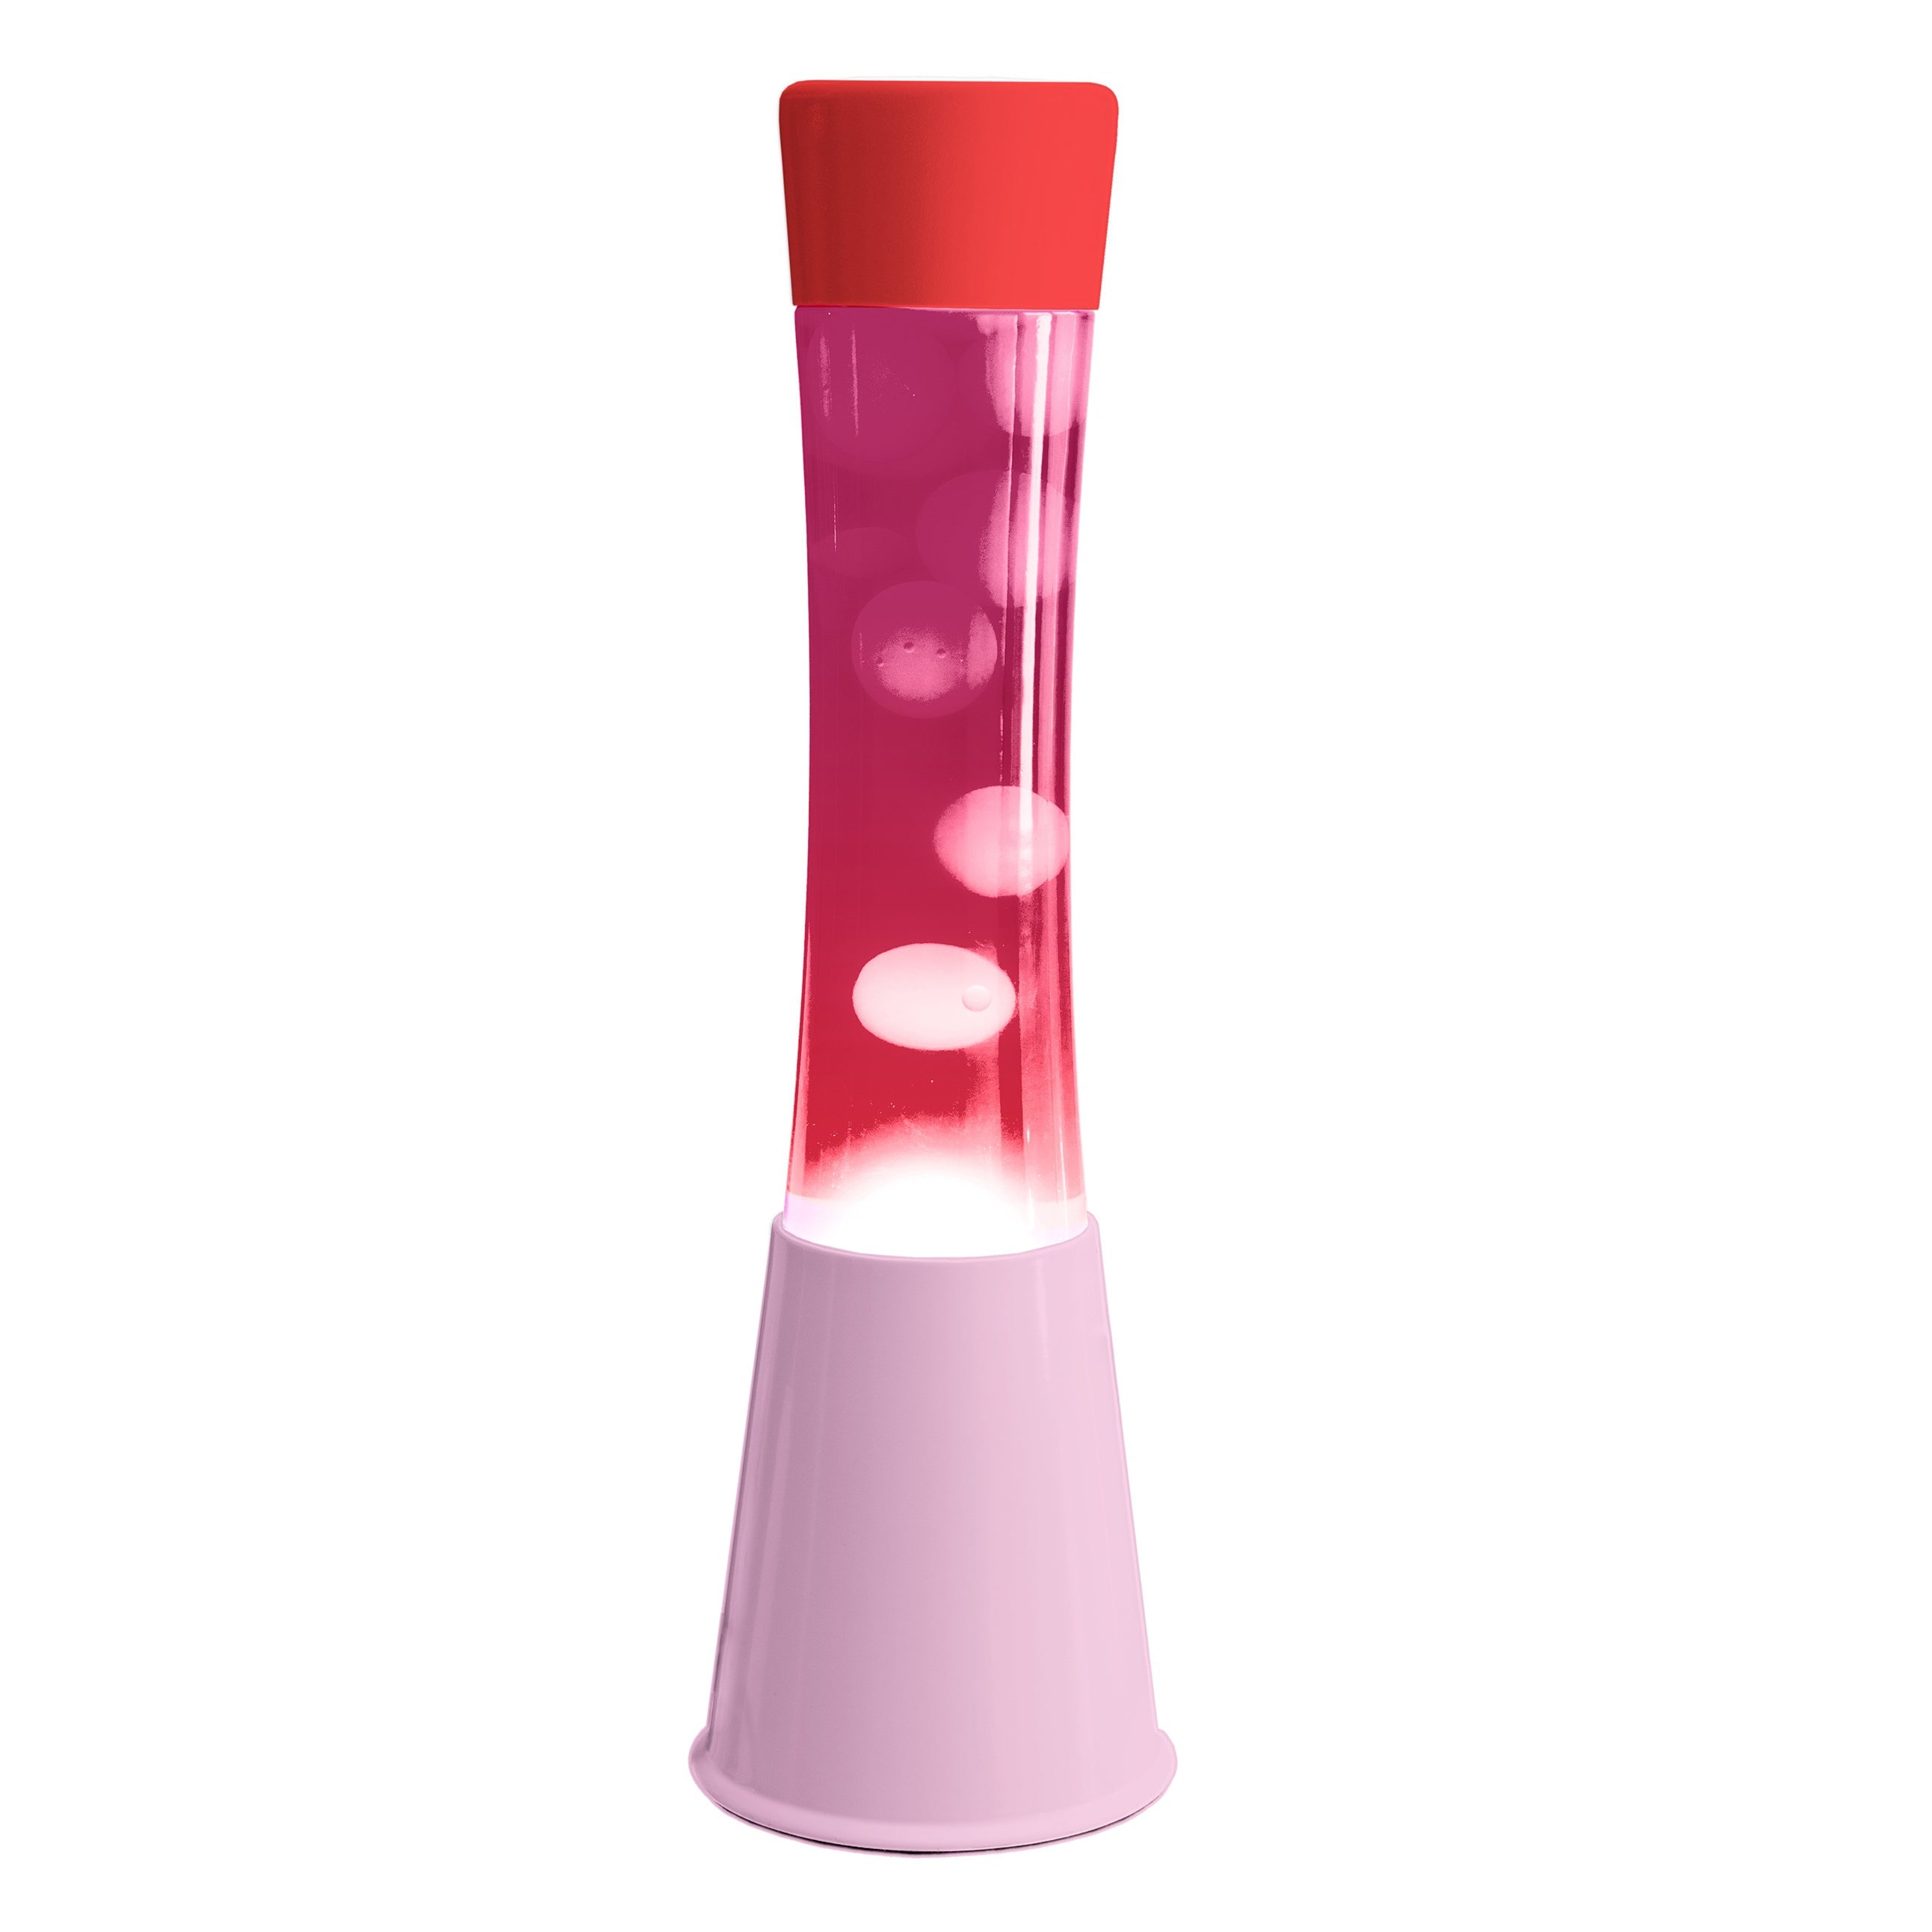 Fisura - lámpara de lava rosa. base rosa, líquido rosa, lava transparente y tapa roja. lámpara efecto relajante. 11 cm x 11cm x 39,5 cm.